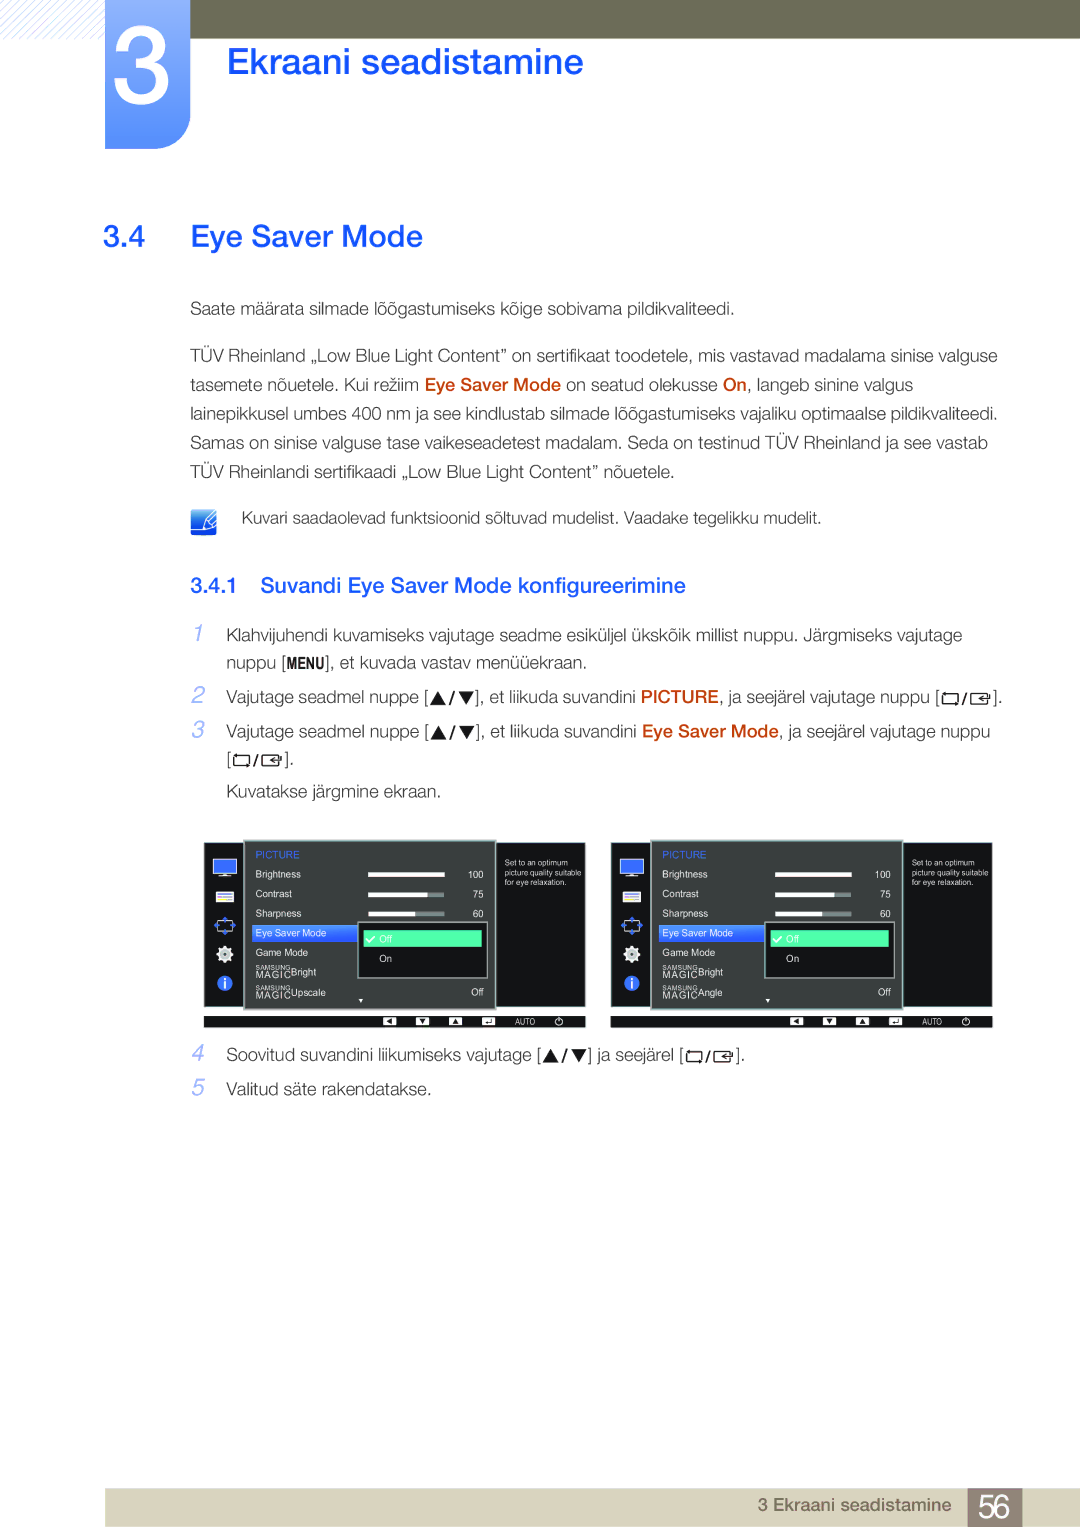 Samsung LS24E45KBSV/EN, LS24E65UPL/EN, LS27E45KBS/EN, LS22E45UDWG/EN manual Suvandi Eye Saver Mode konfigureerimine 